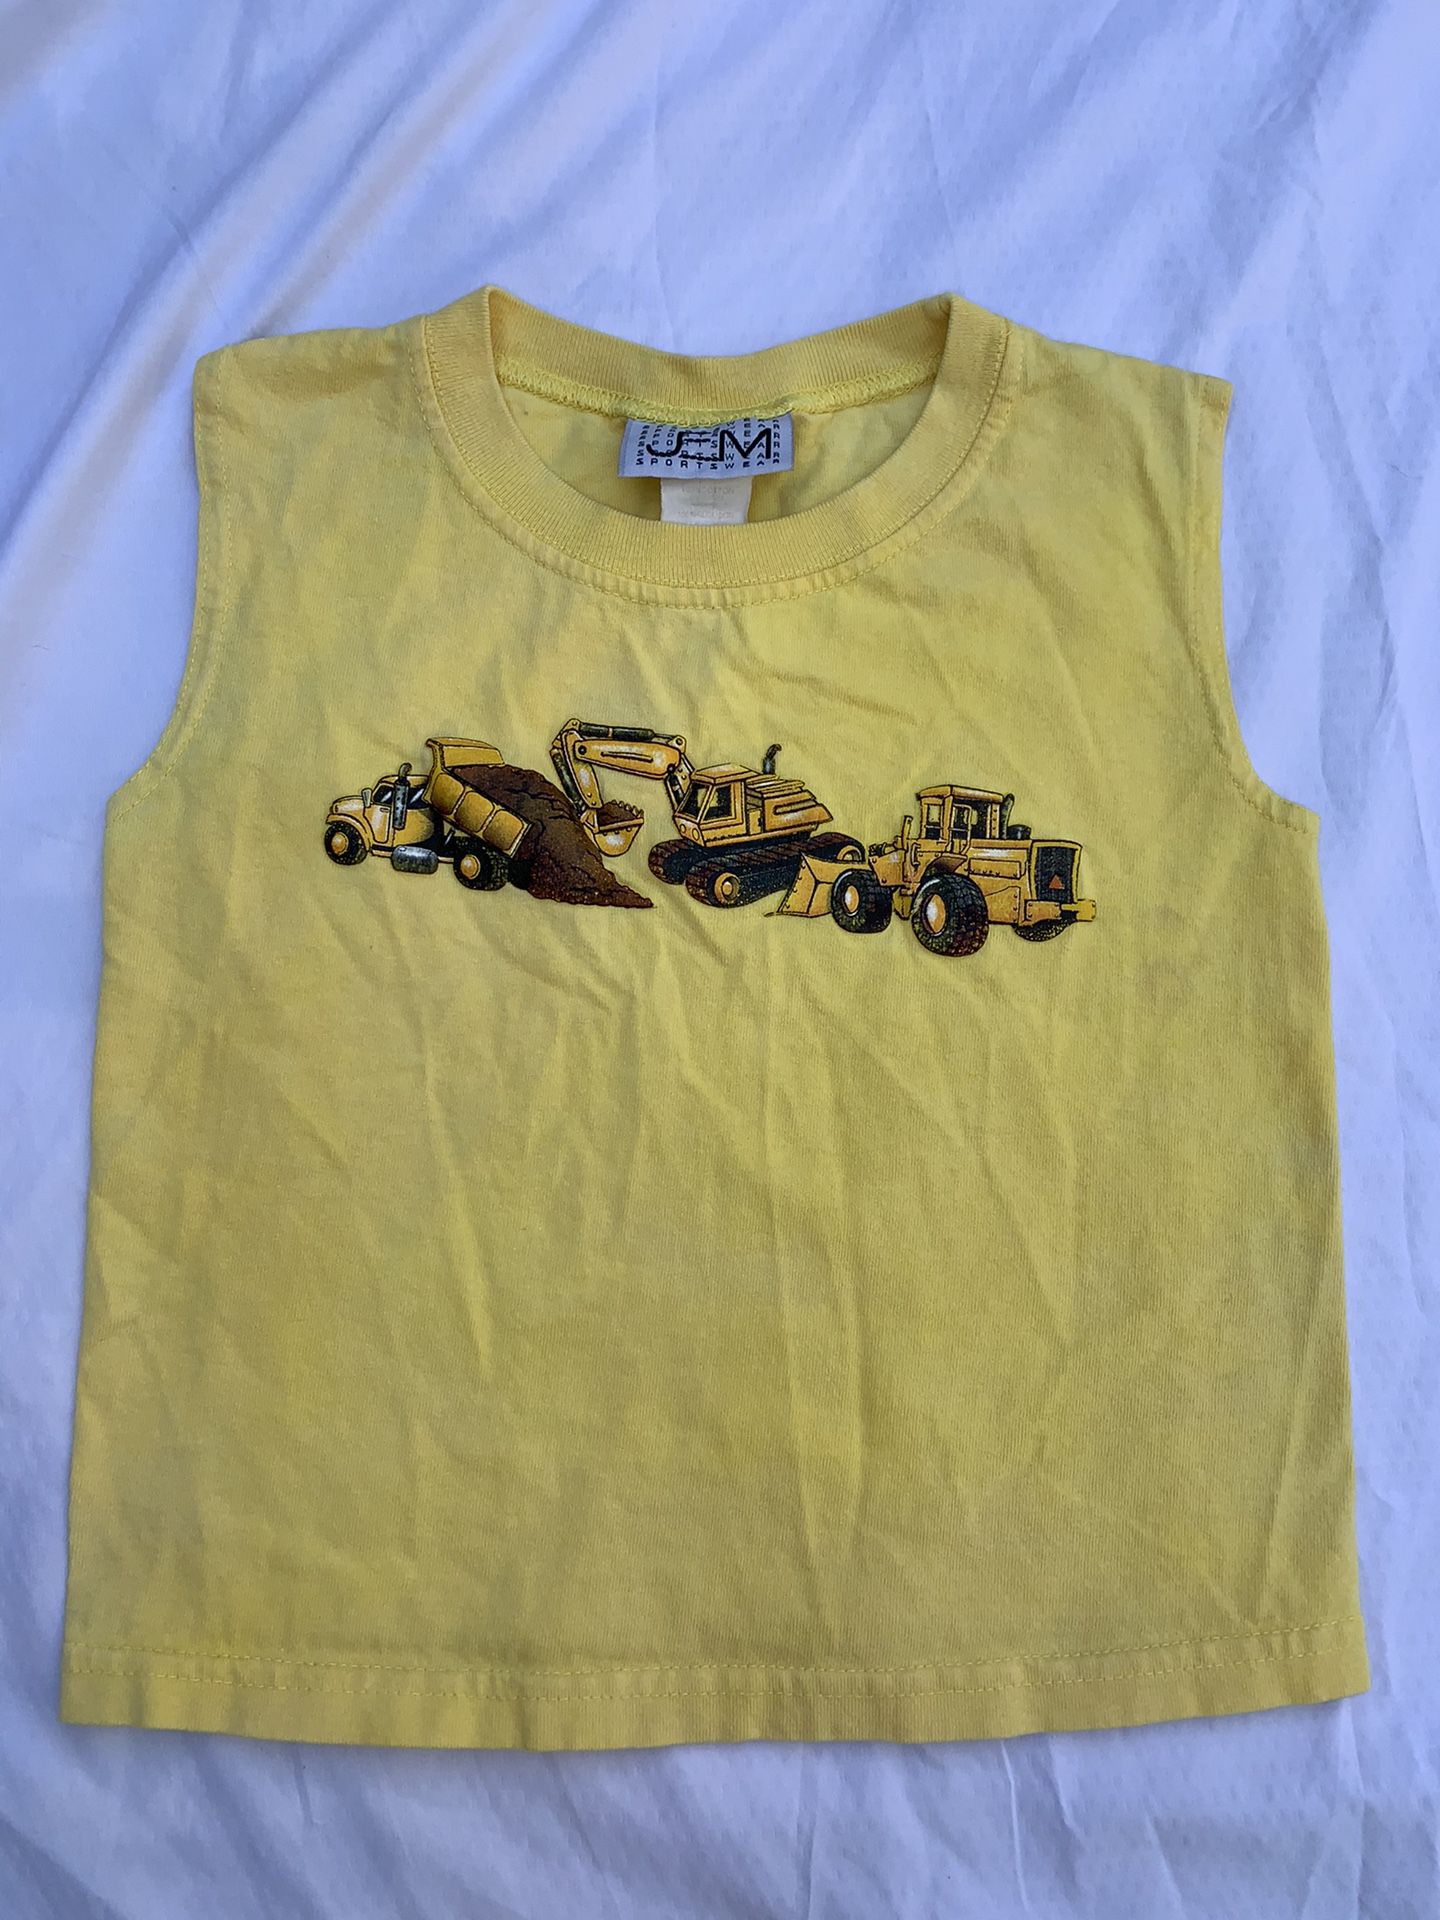 Boys size 4T sleeveless yellow bulldozer shirt